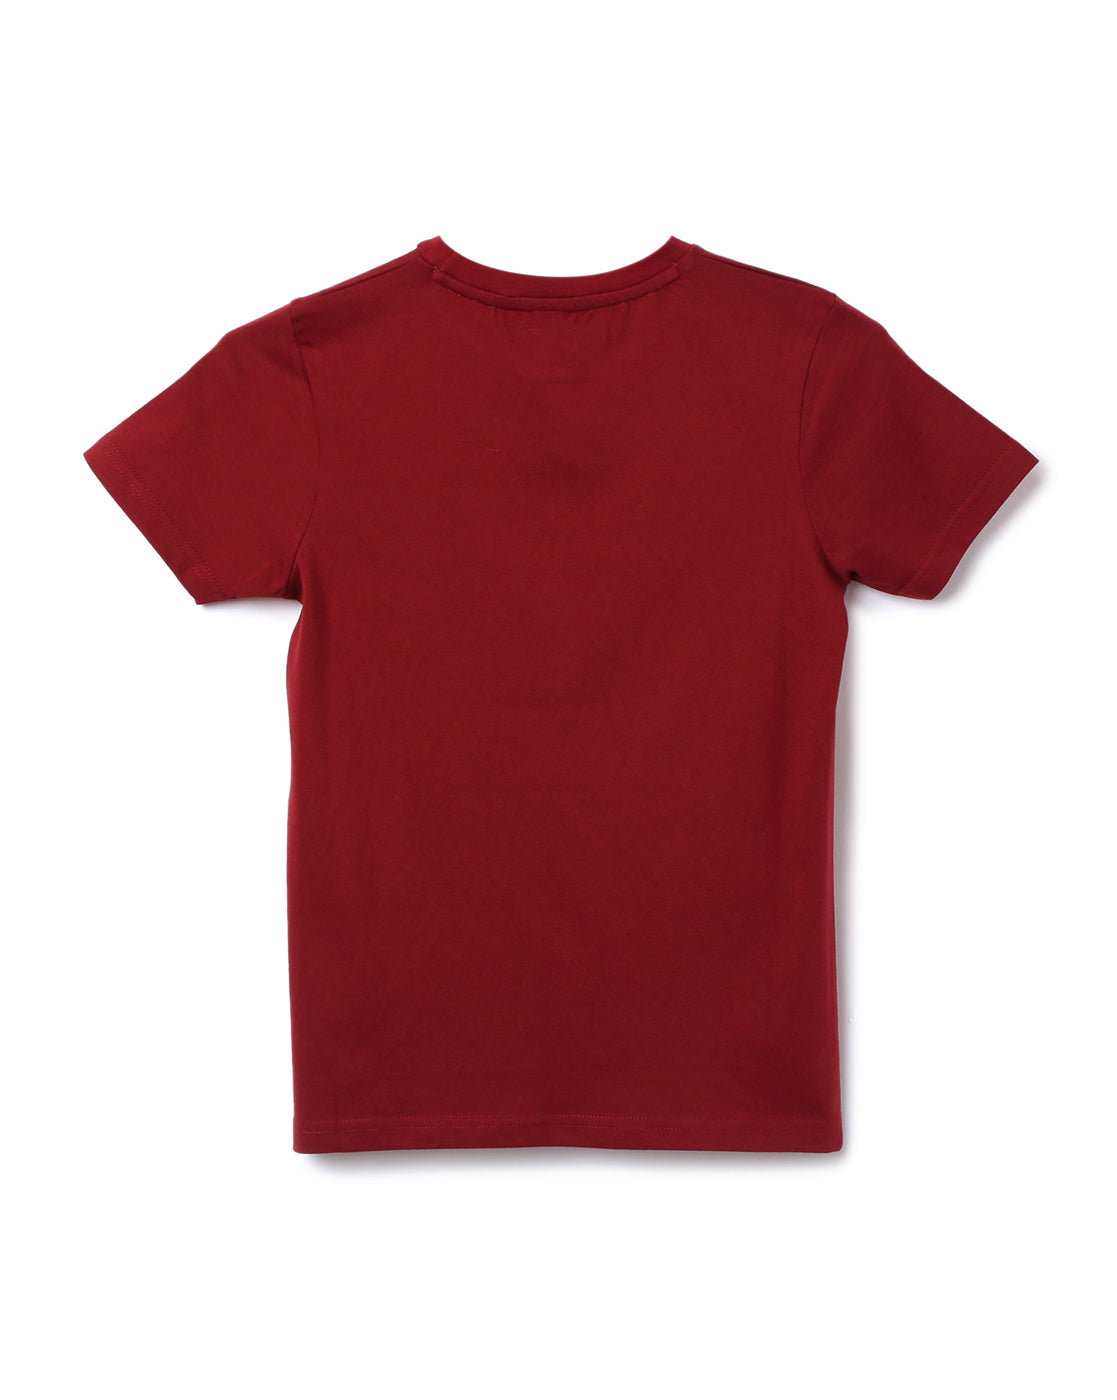 Boys Brand Slogan Printed Red T-Shirt